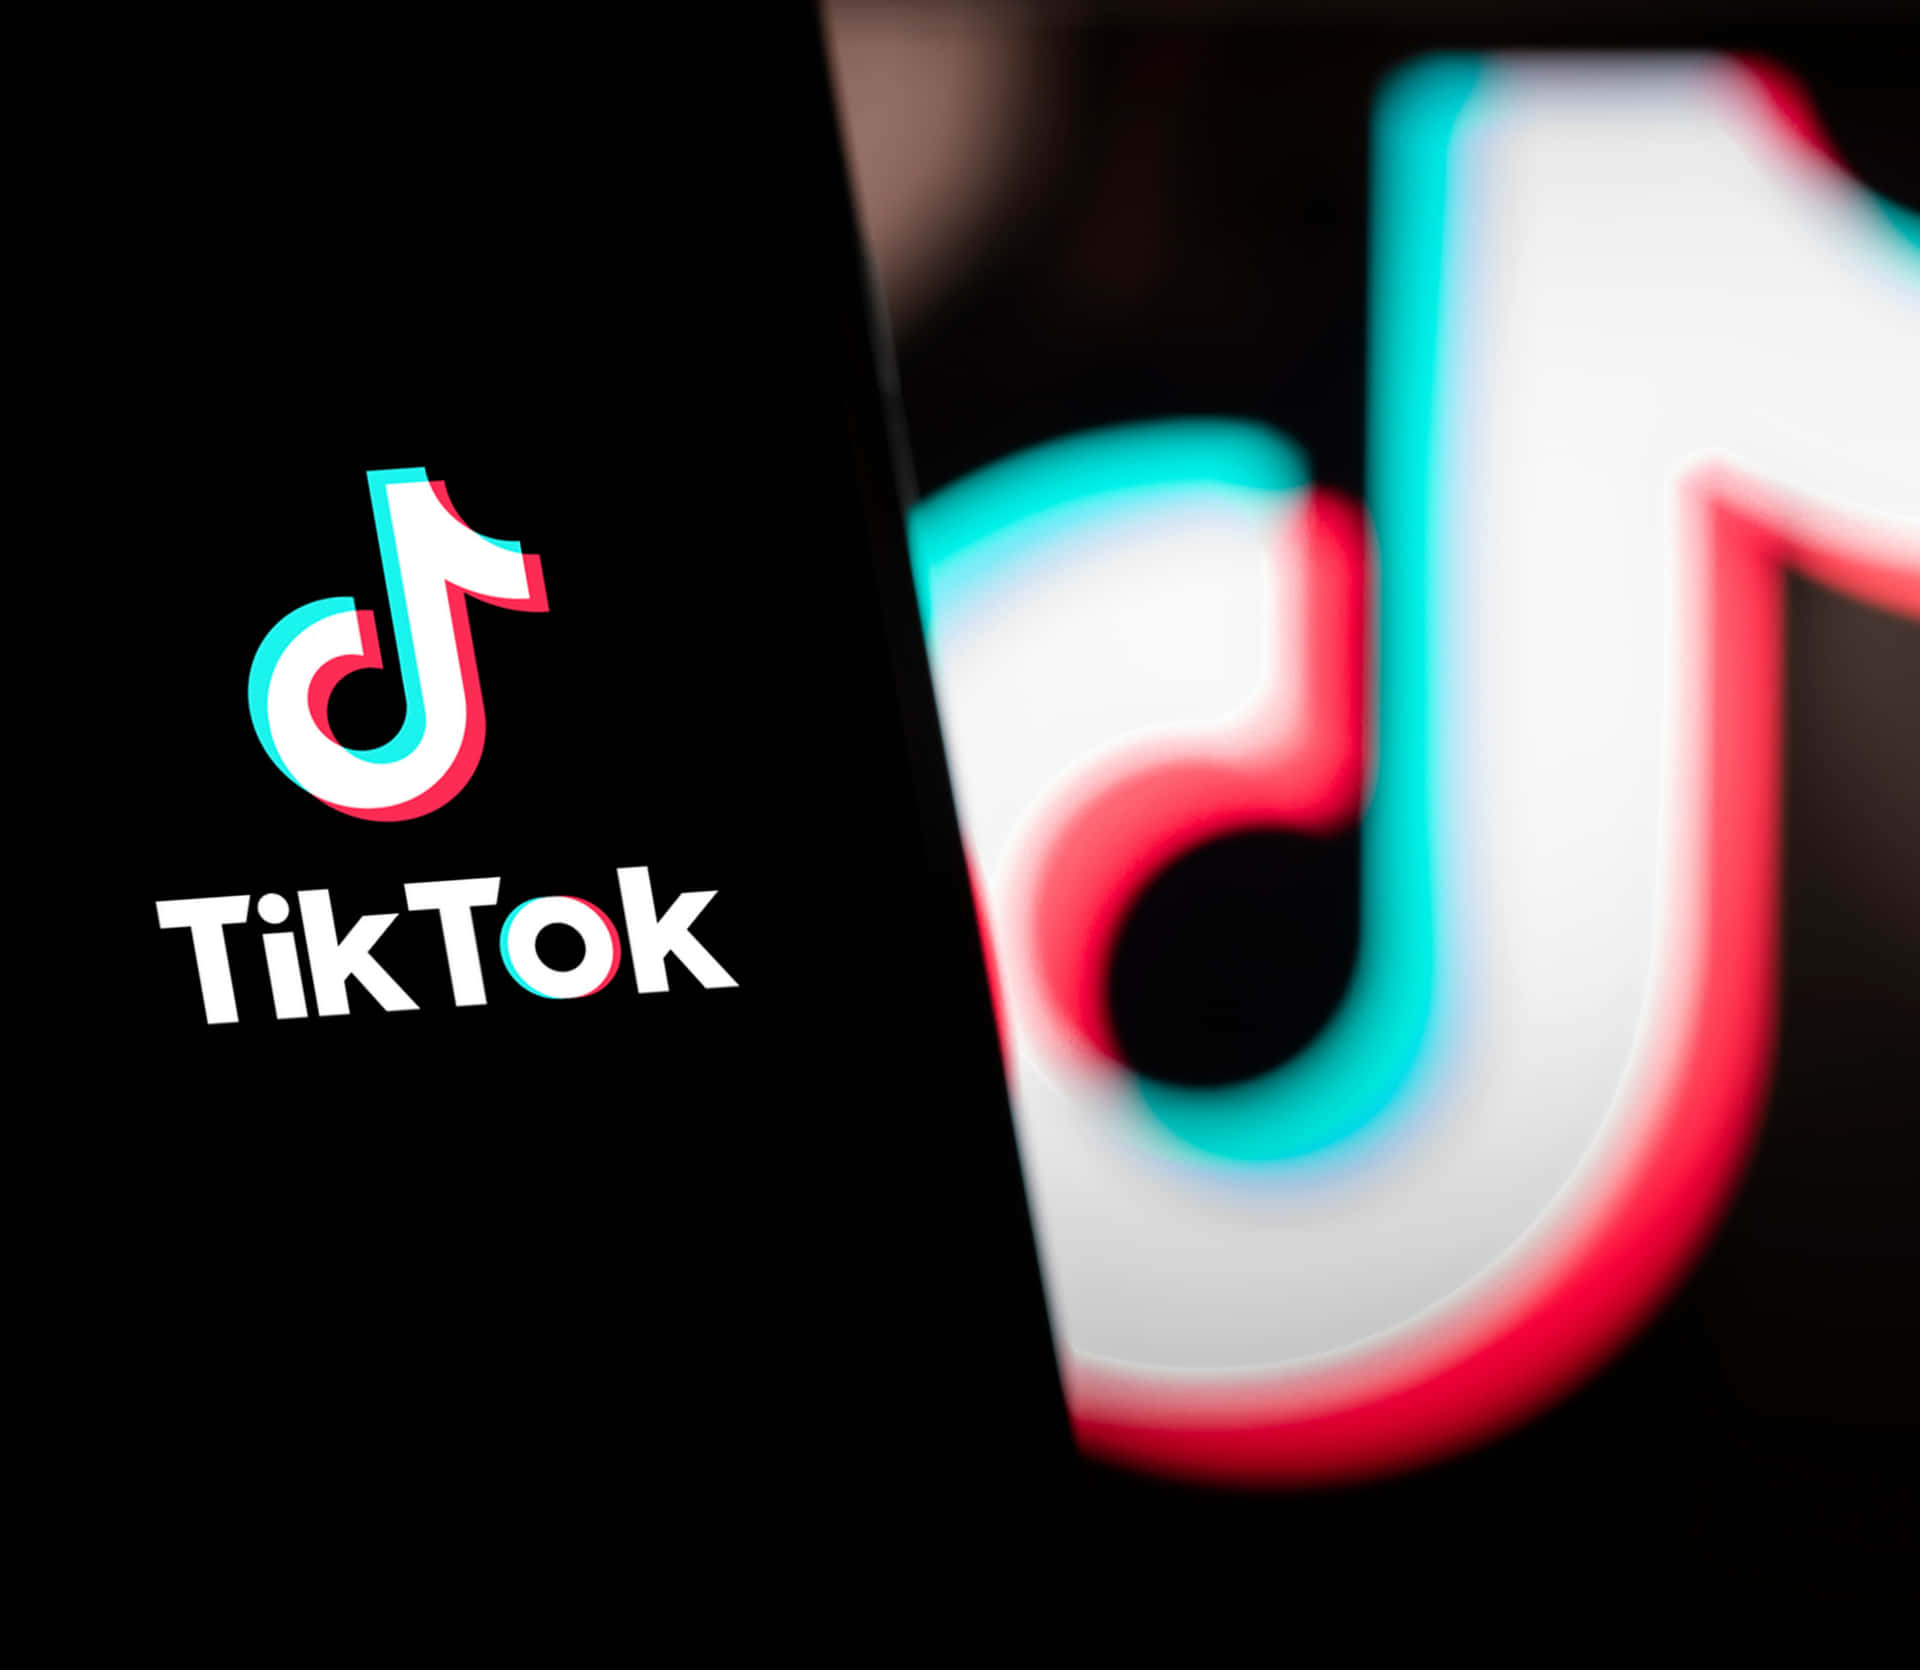 Tiktok Logo With A Black Background Background